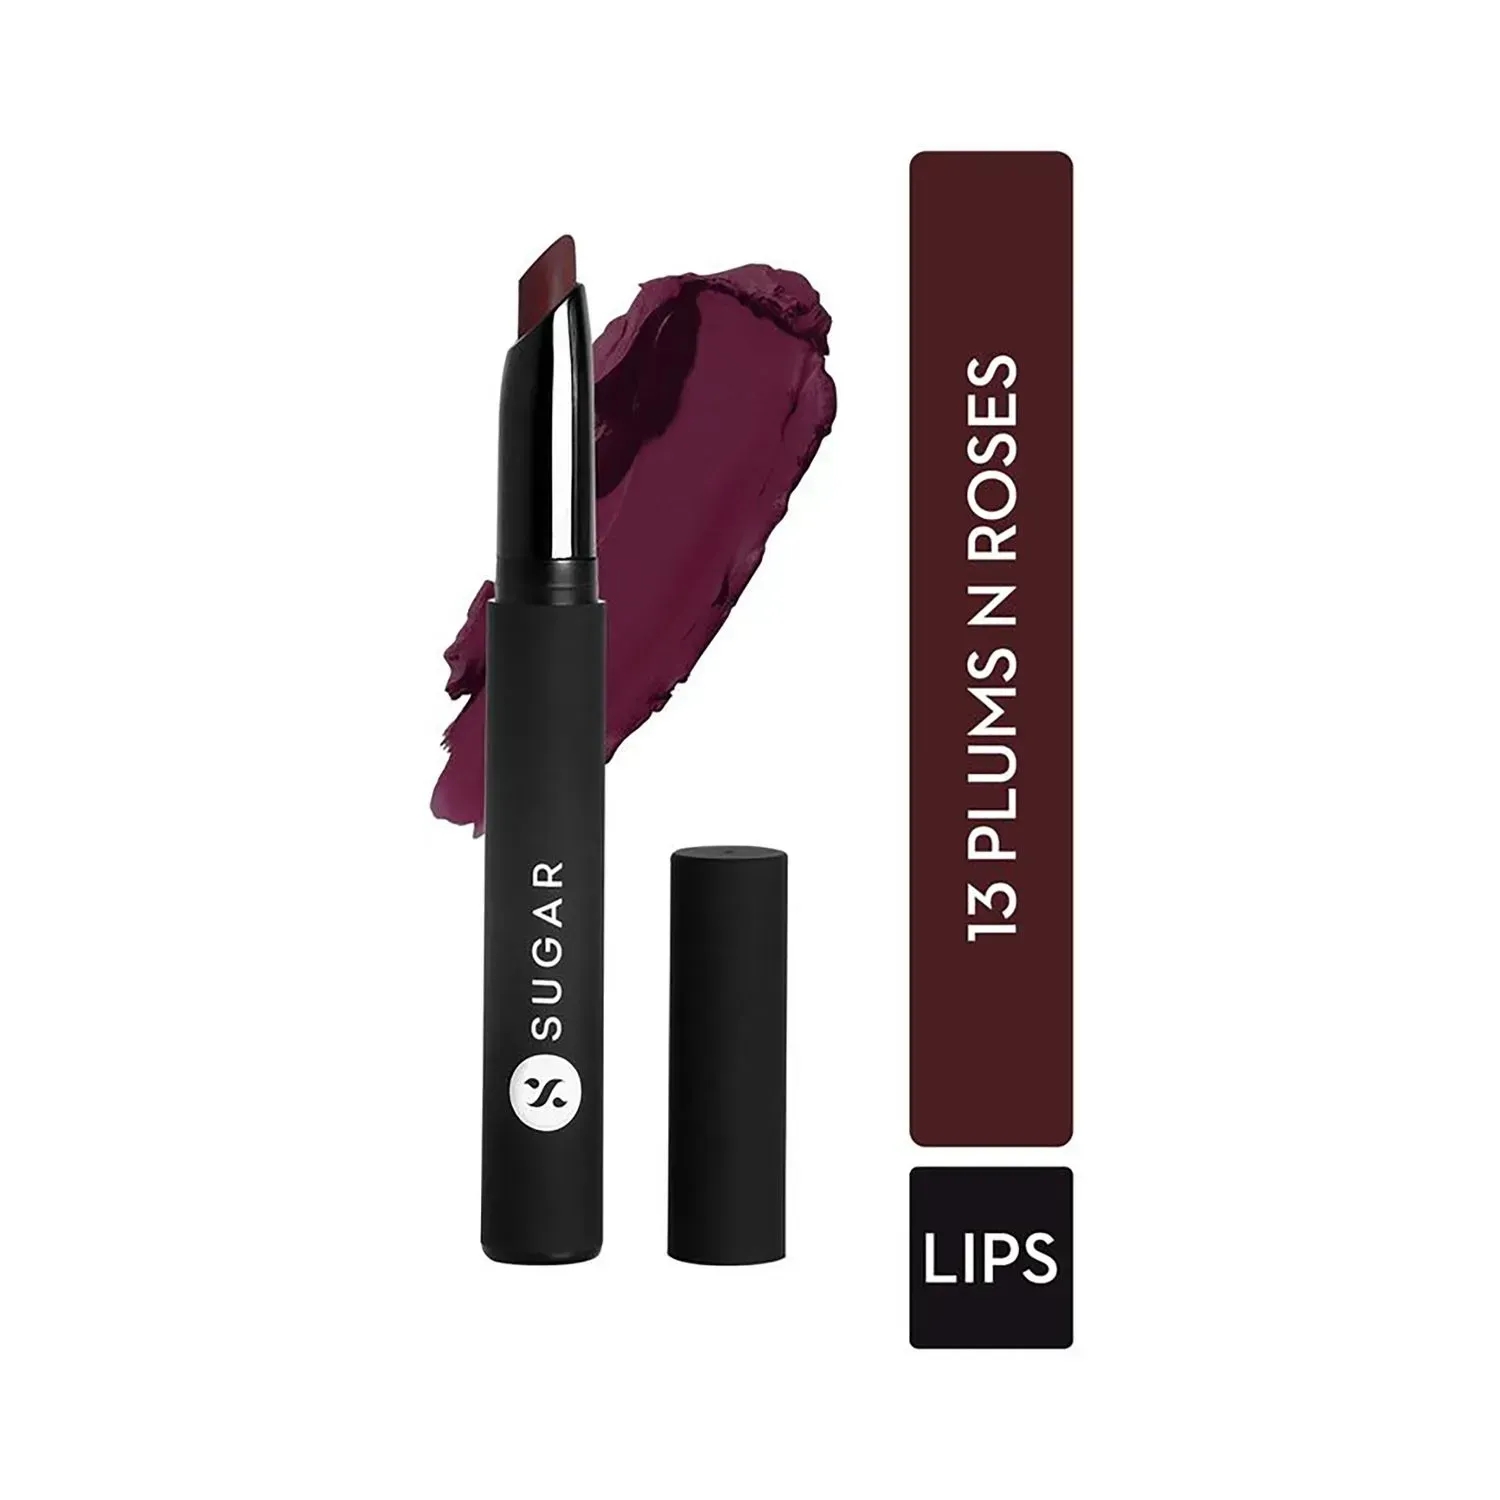 SUGAR Cosmetics | SUGAR Cosmetics Matte Attack Transferproof Lipstick - 13 Plums N Roses (Deep Reddish Plum) (2g)